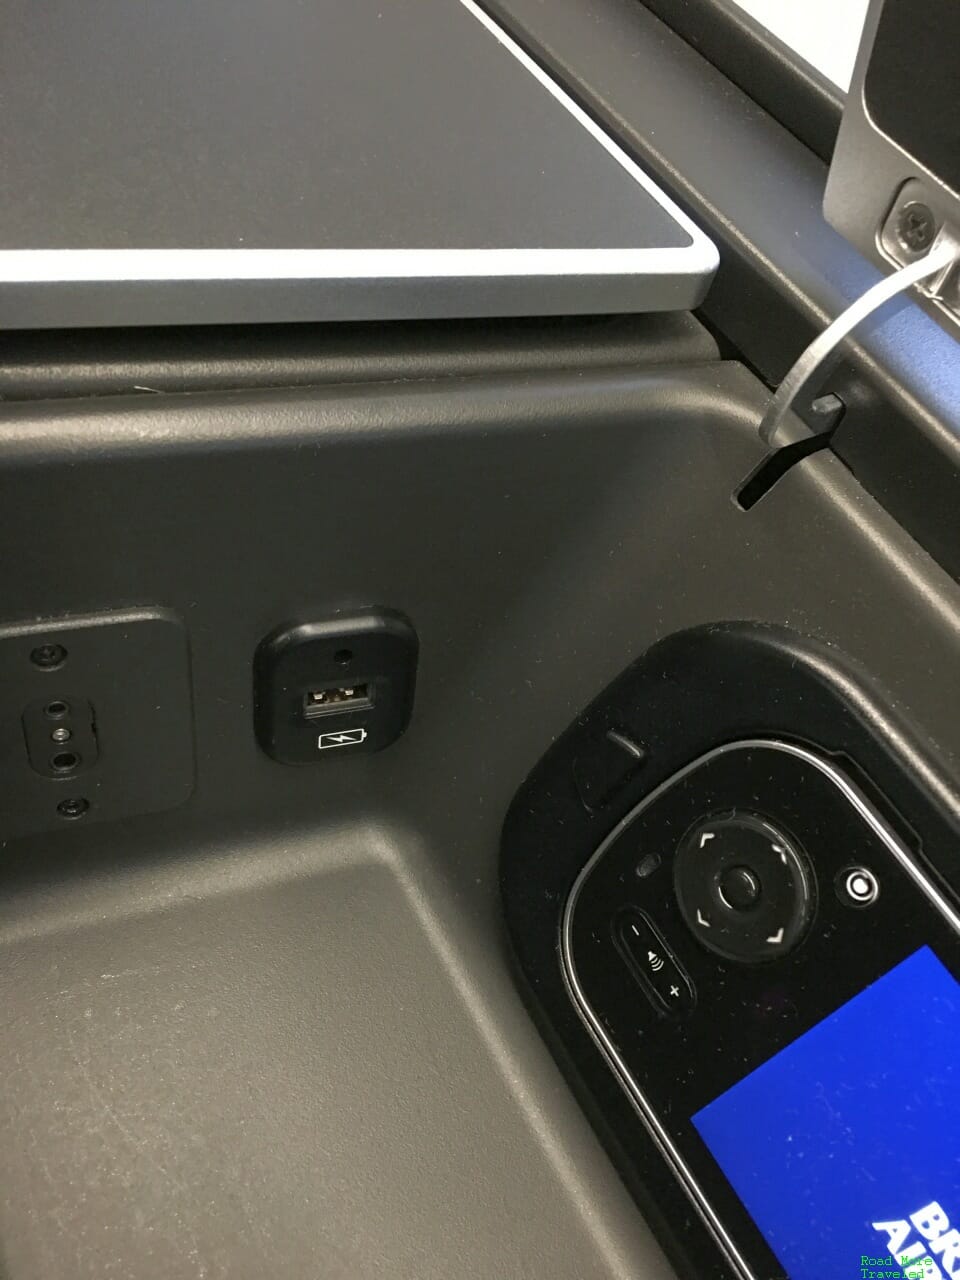 Club Suite additional USB port